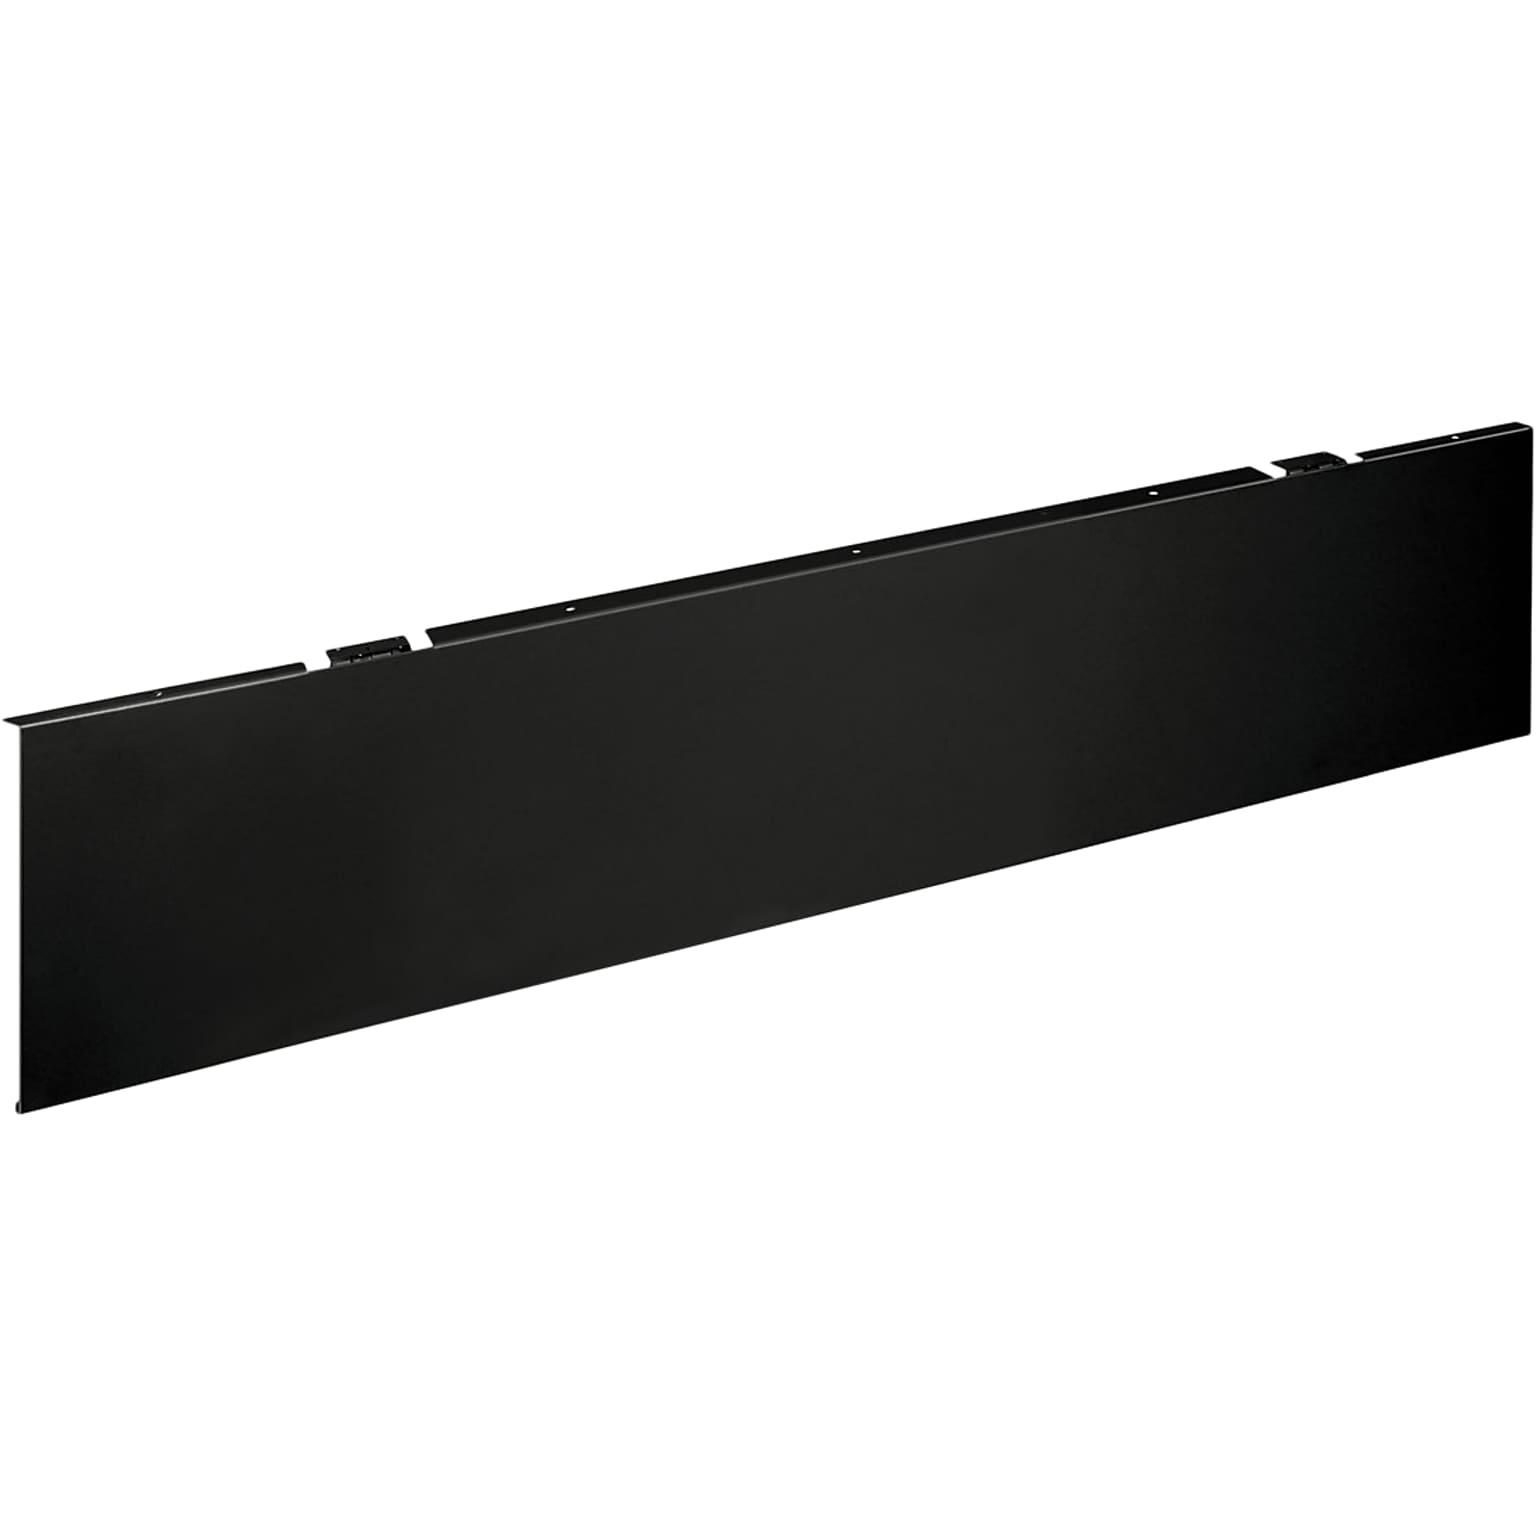 HON Universal Modesty 9.62H x 38W Steel Non-Tackable Panel, Black (HONMTUMOD38P)